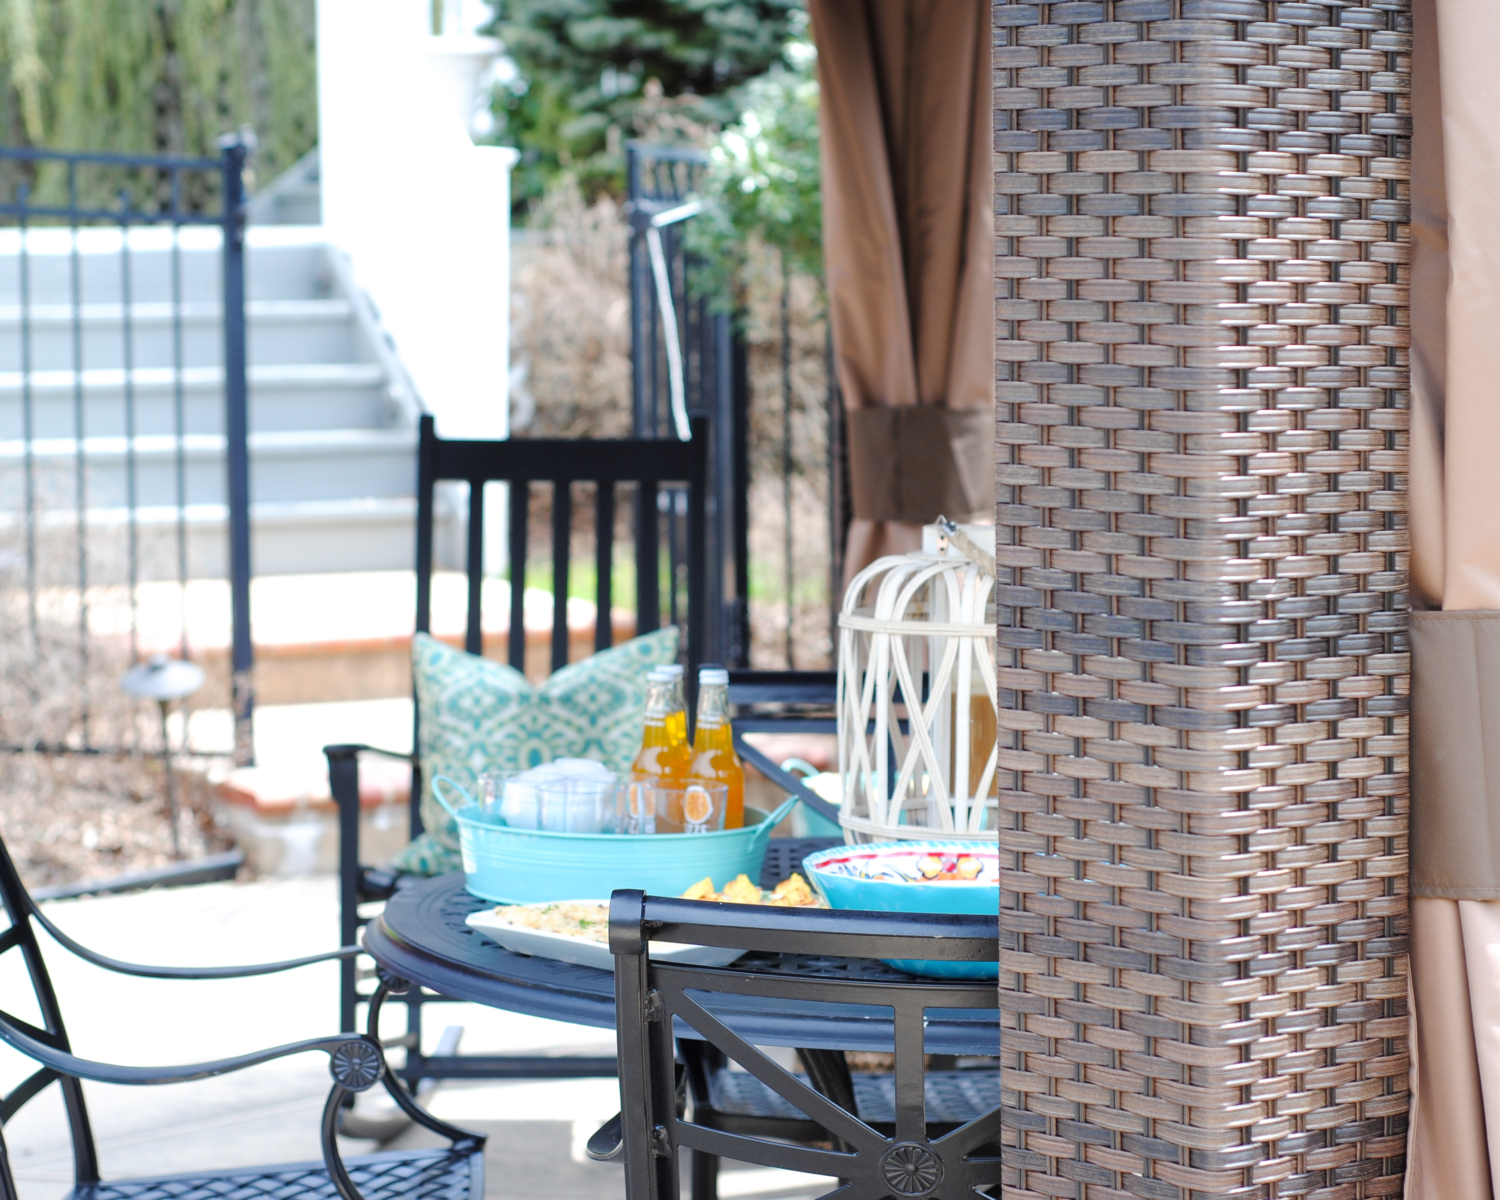 Luxury outdoor woven wicker gazebo for an amazing price!